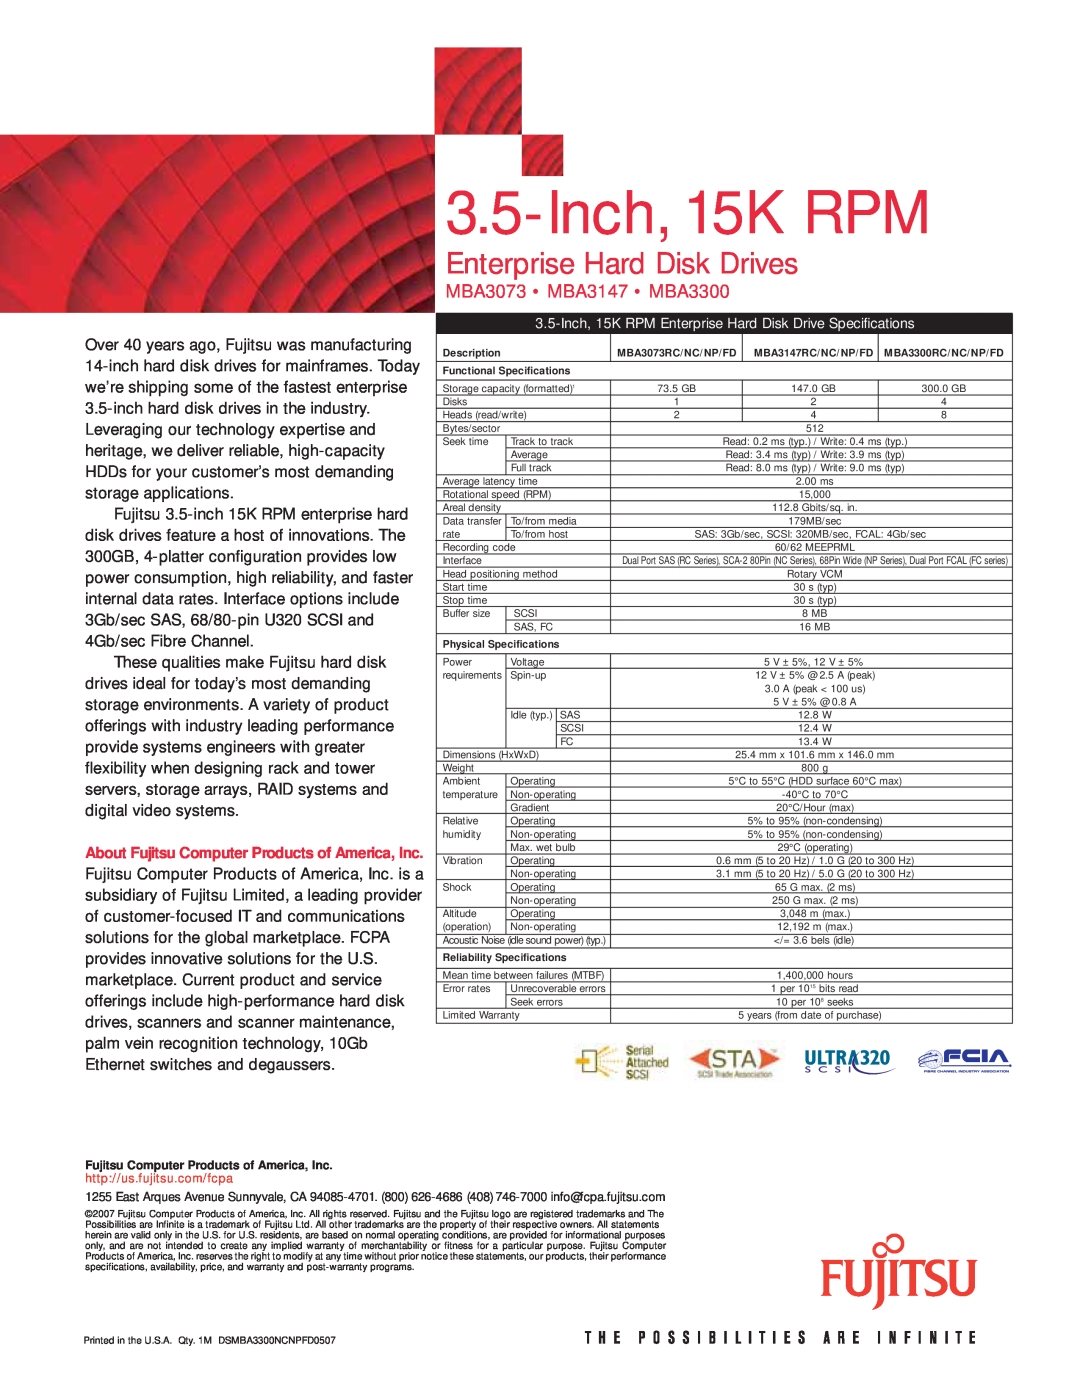 Fujitsu manual Inch, 15K RPM, Enterprise Hard Disk Drives, MBA3073 MBA3147 MBA3300 